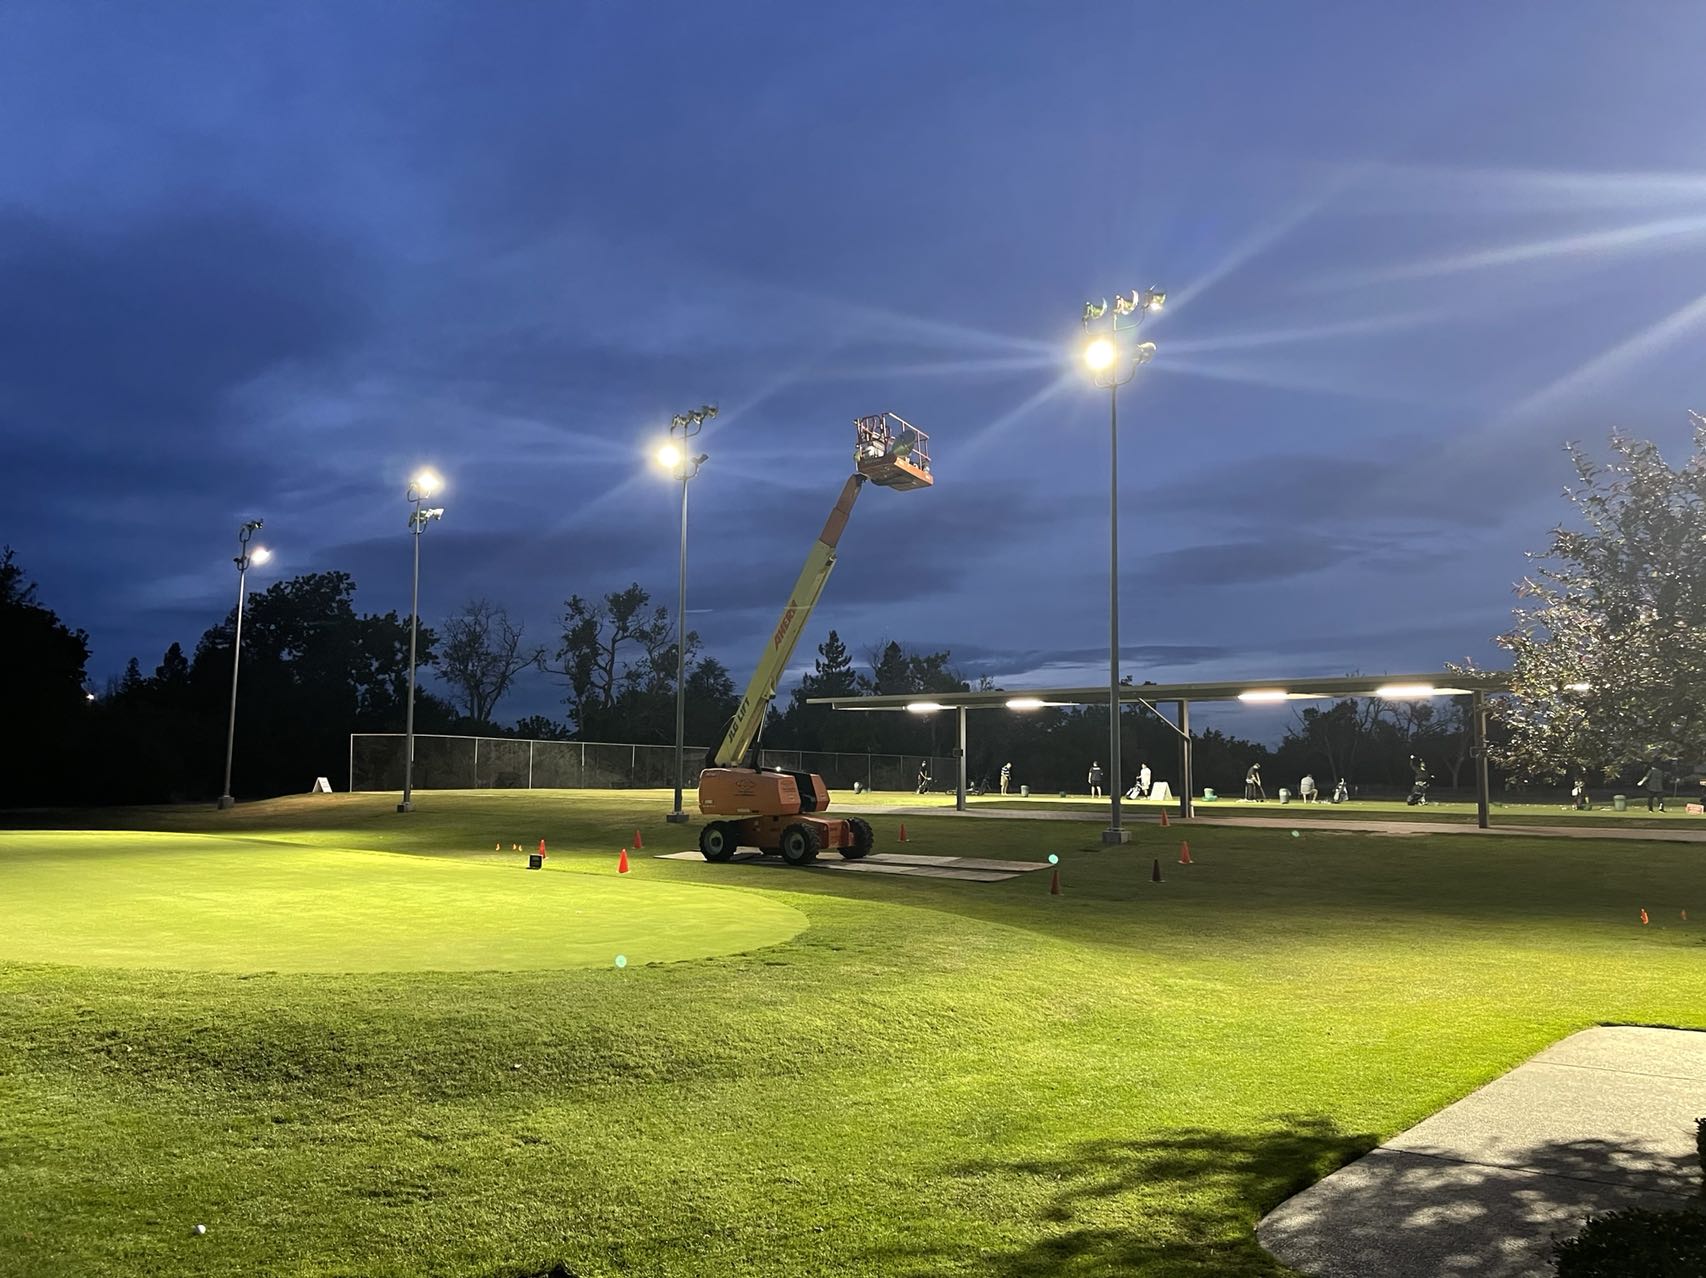 Golf Course Lighting and Driving Range Lights at Pleasanton Golf Center Driving Range